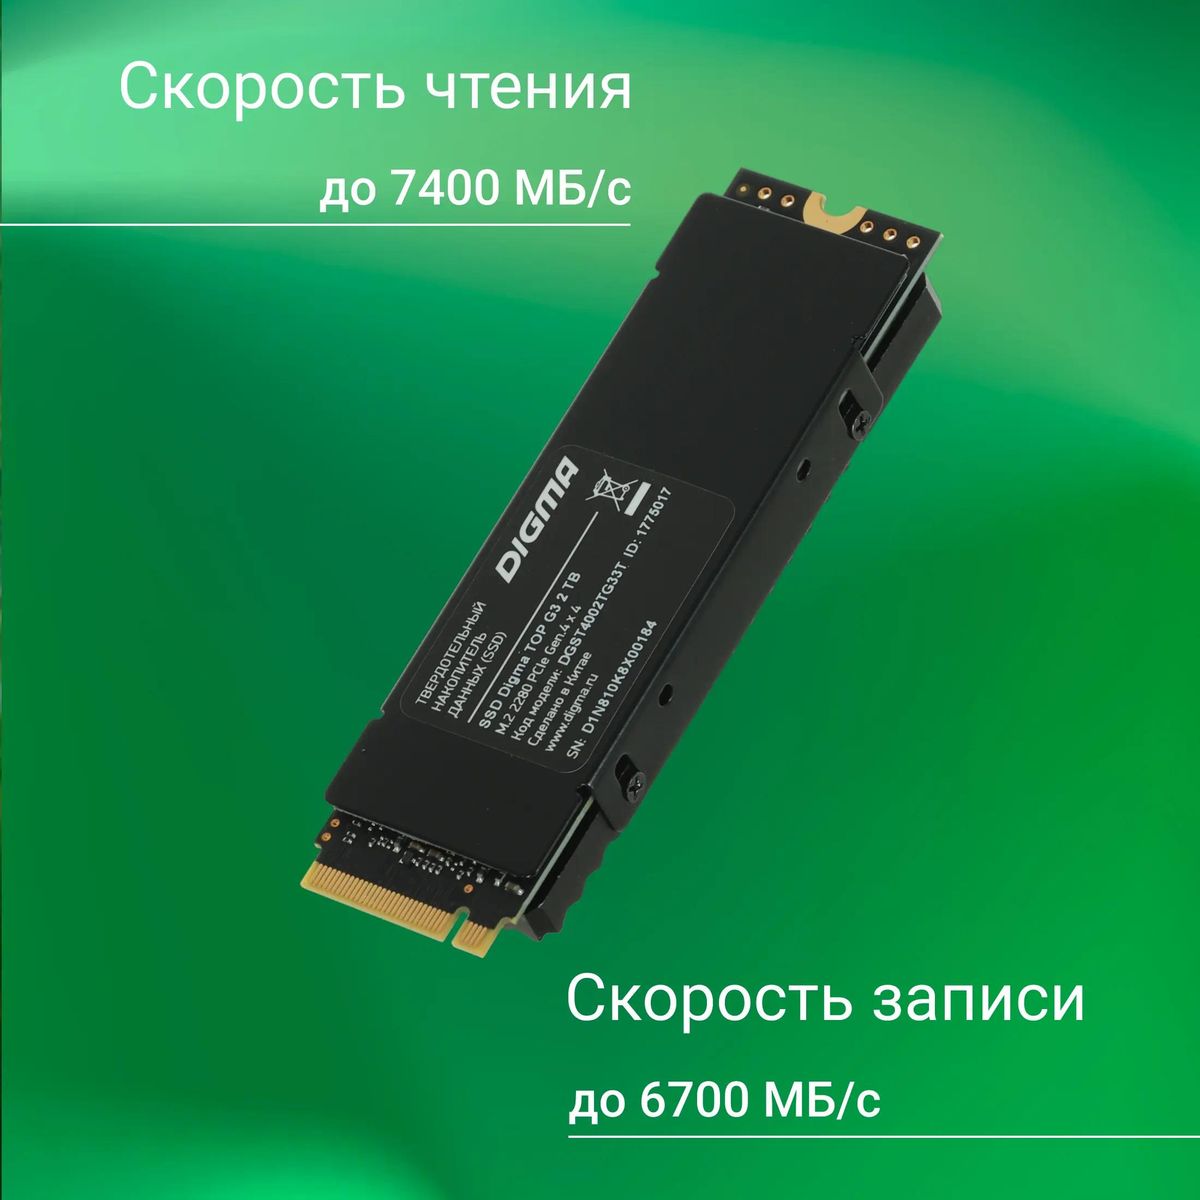 SSD накопитель Digma Top G3 DGST4002TG33T 2ТБ